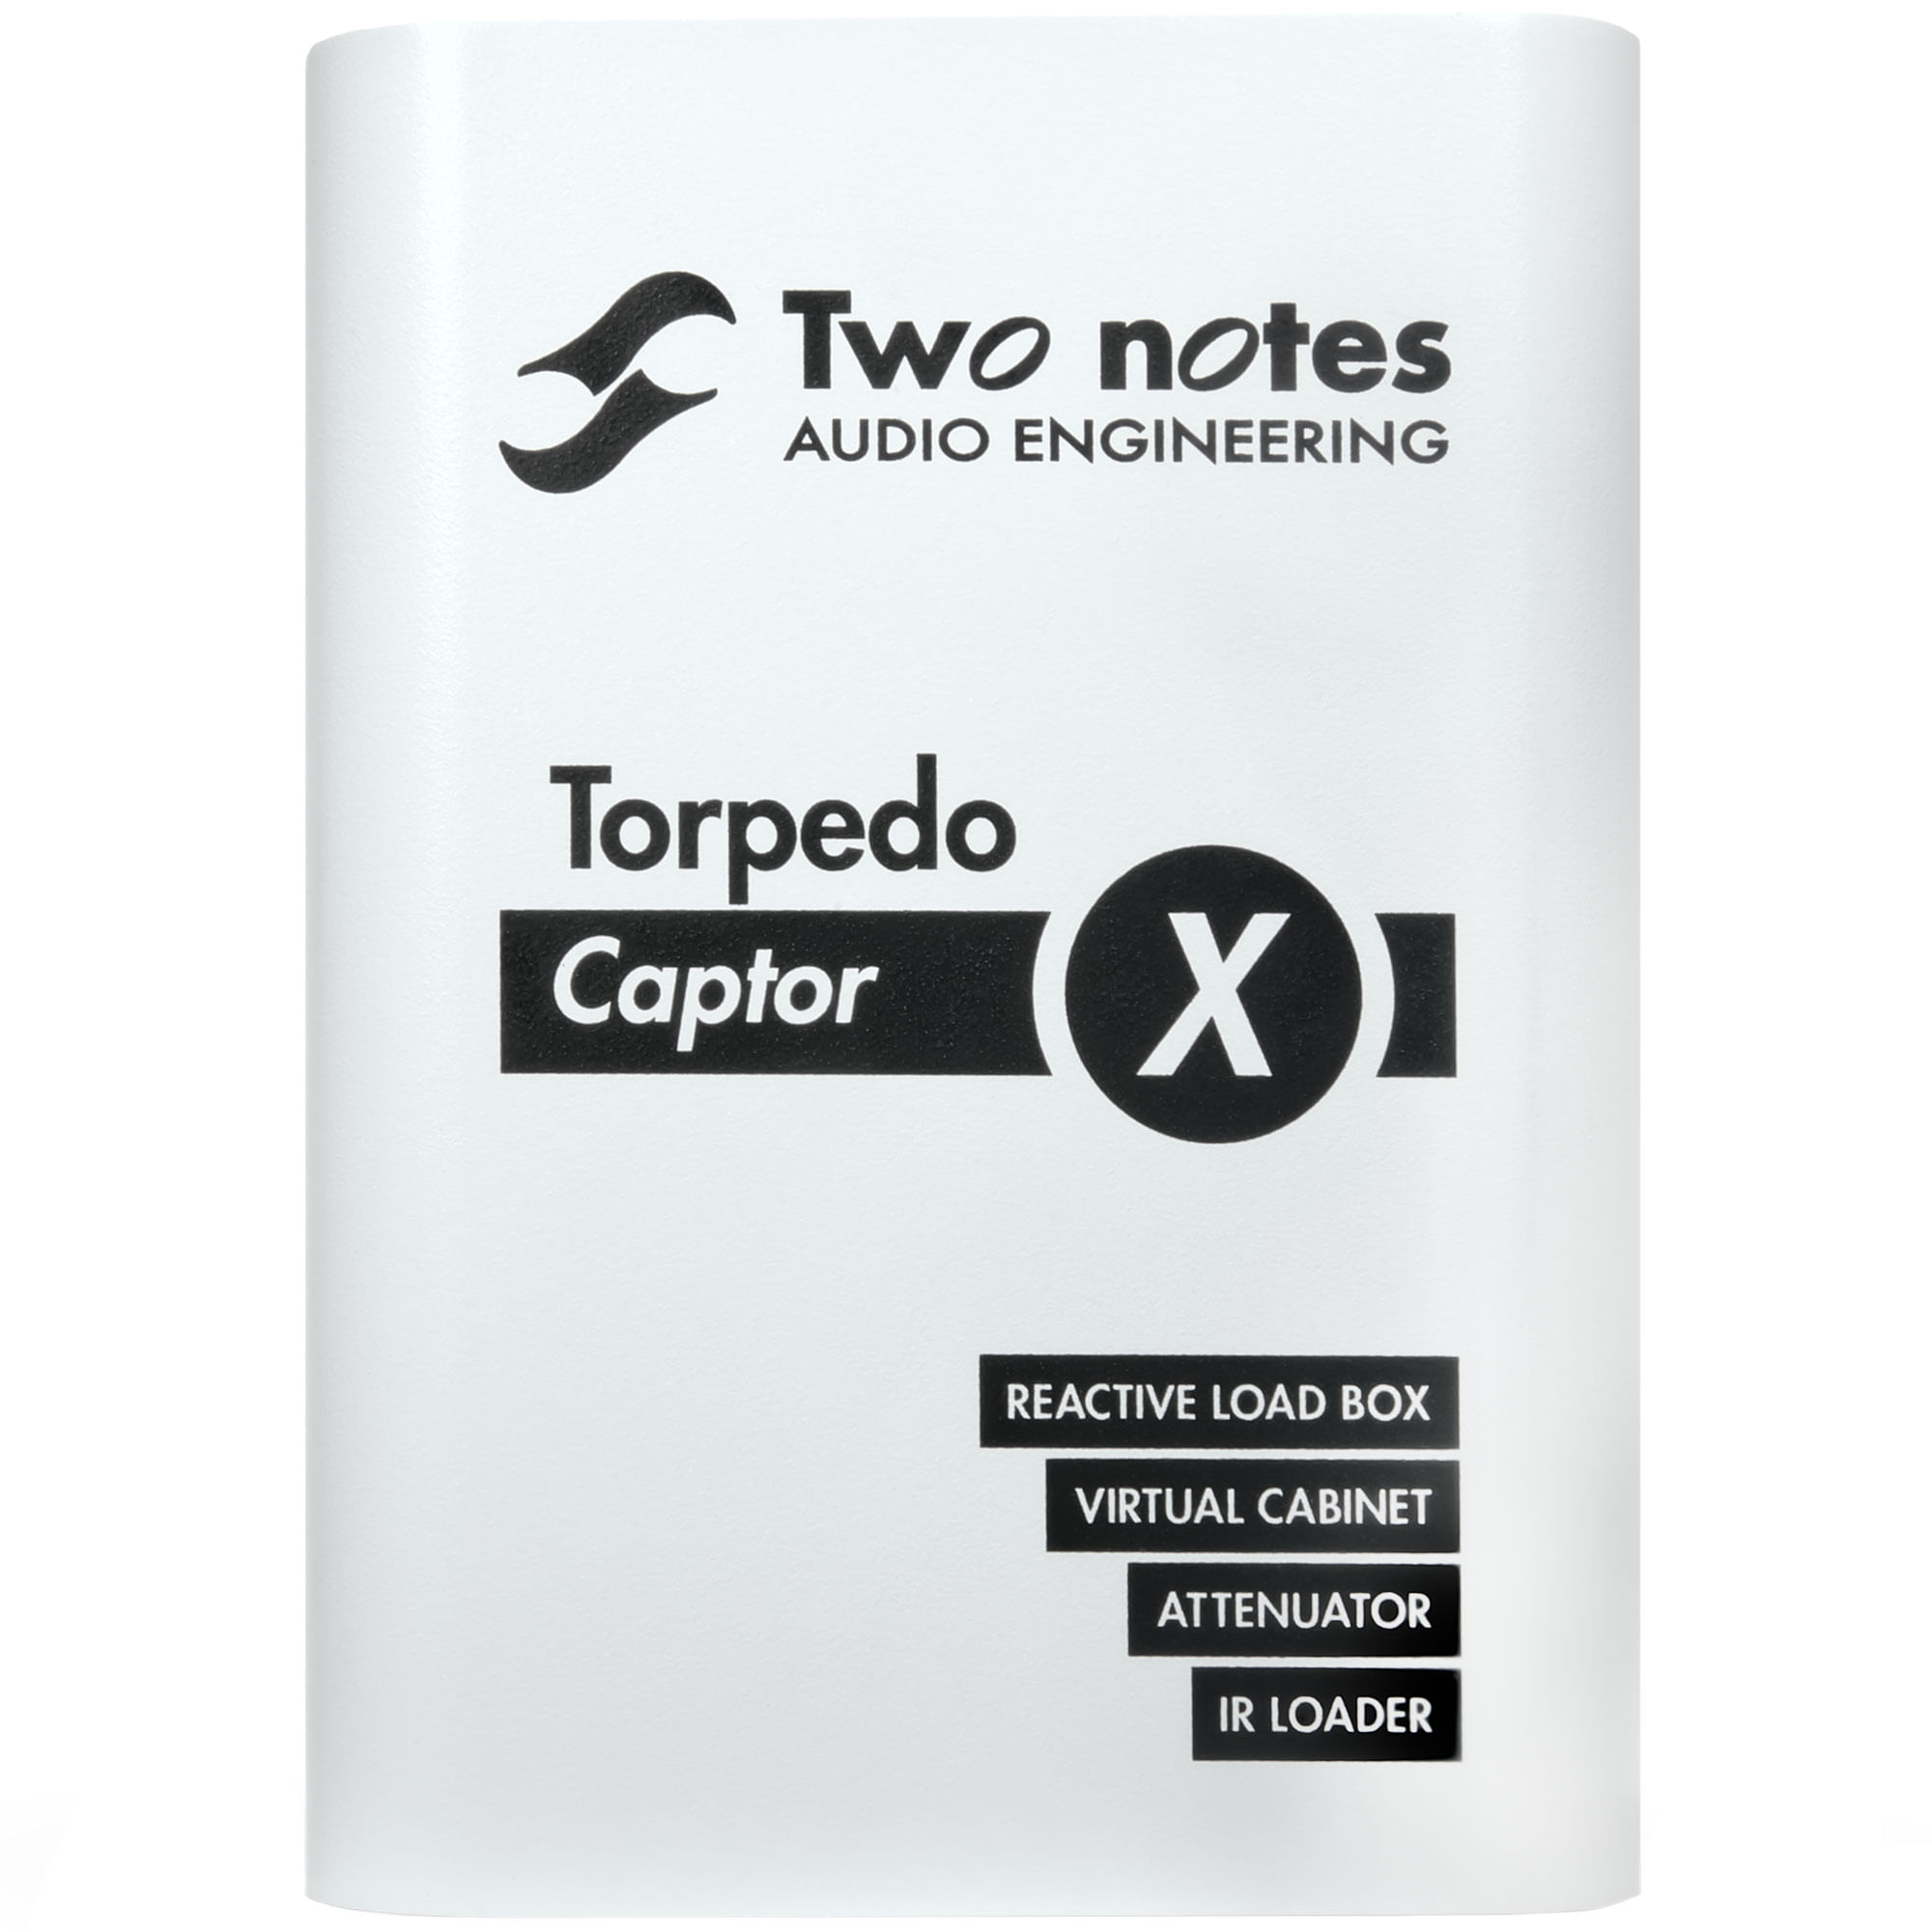 Two notes Torpedo Captor 16Ω